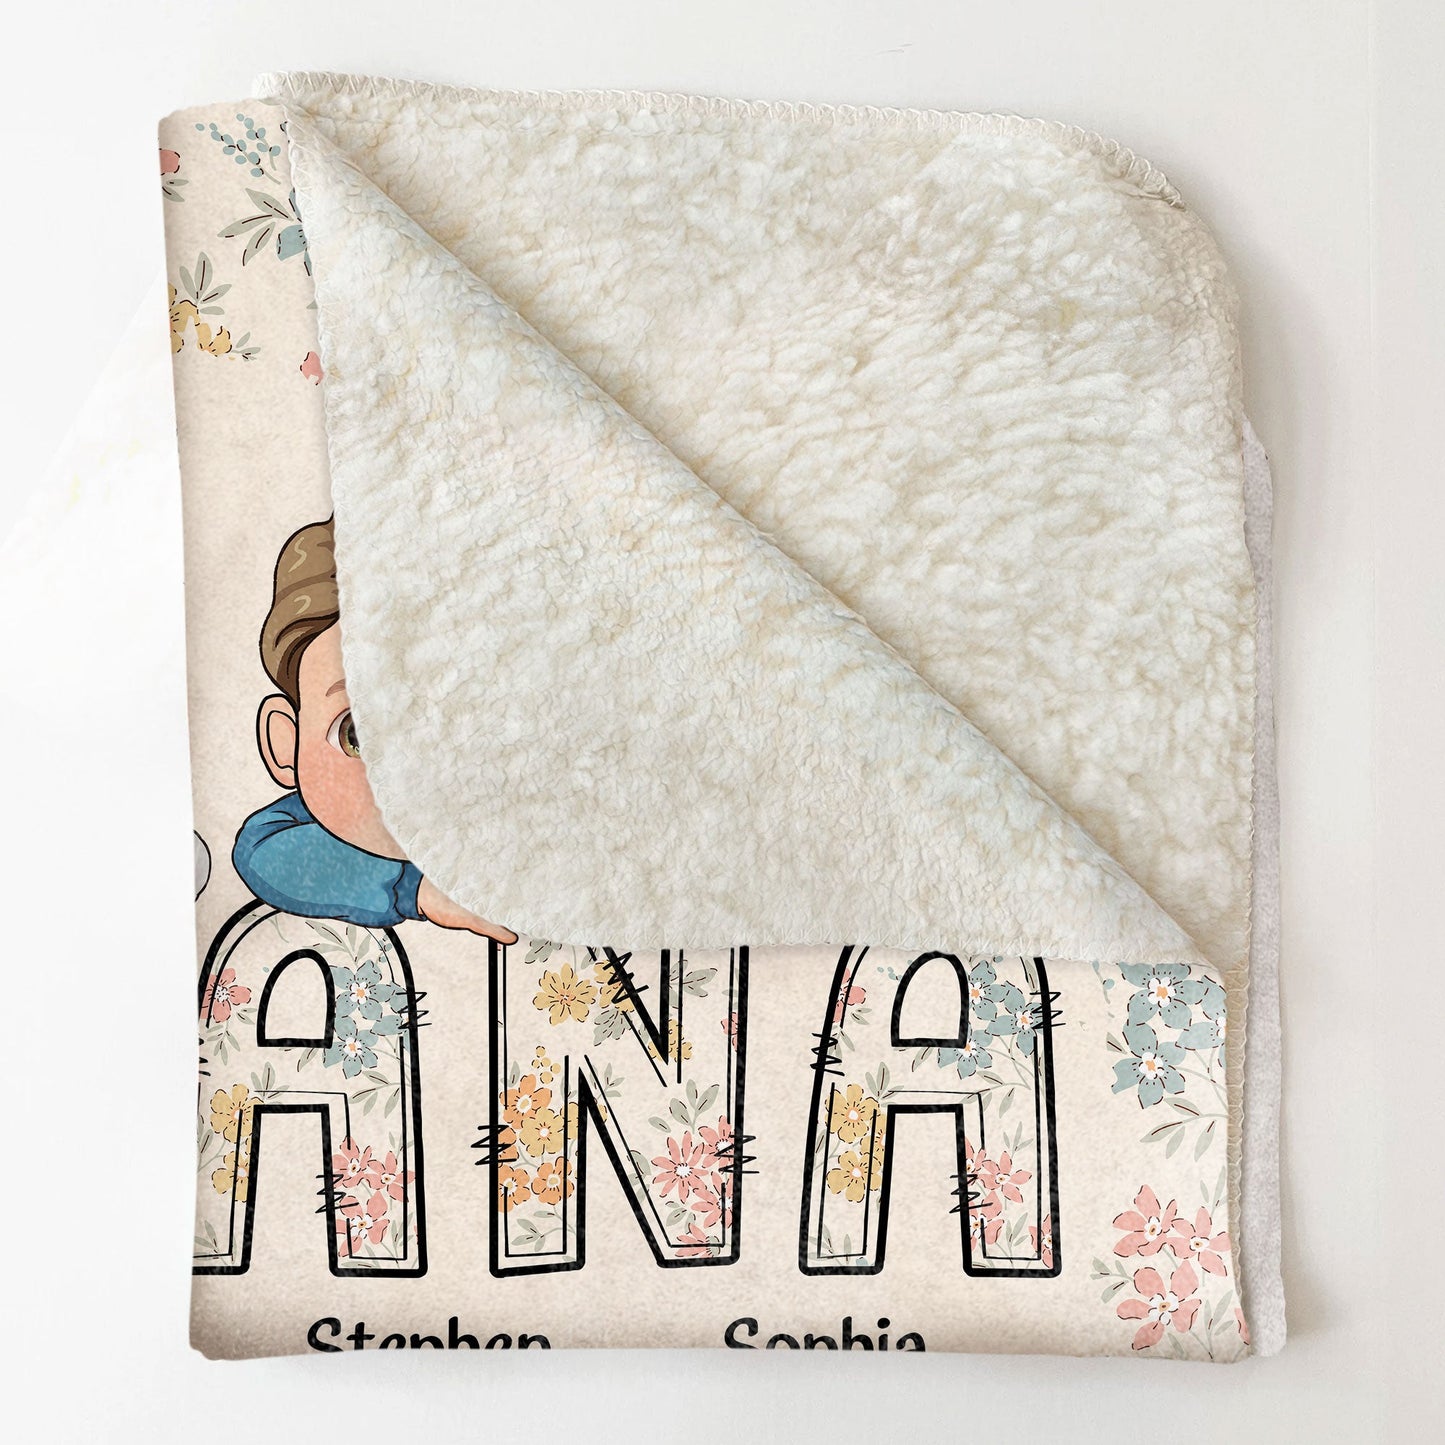 Love You Grandma - Personalized Blanket